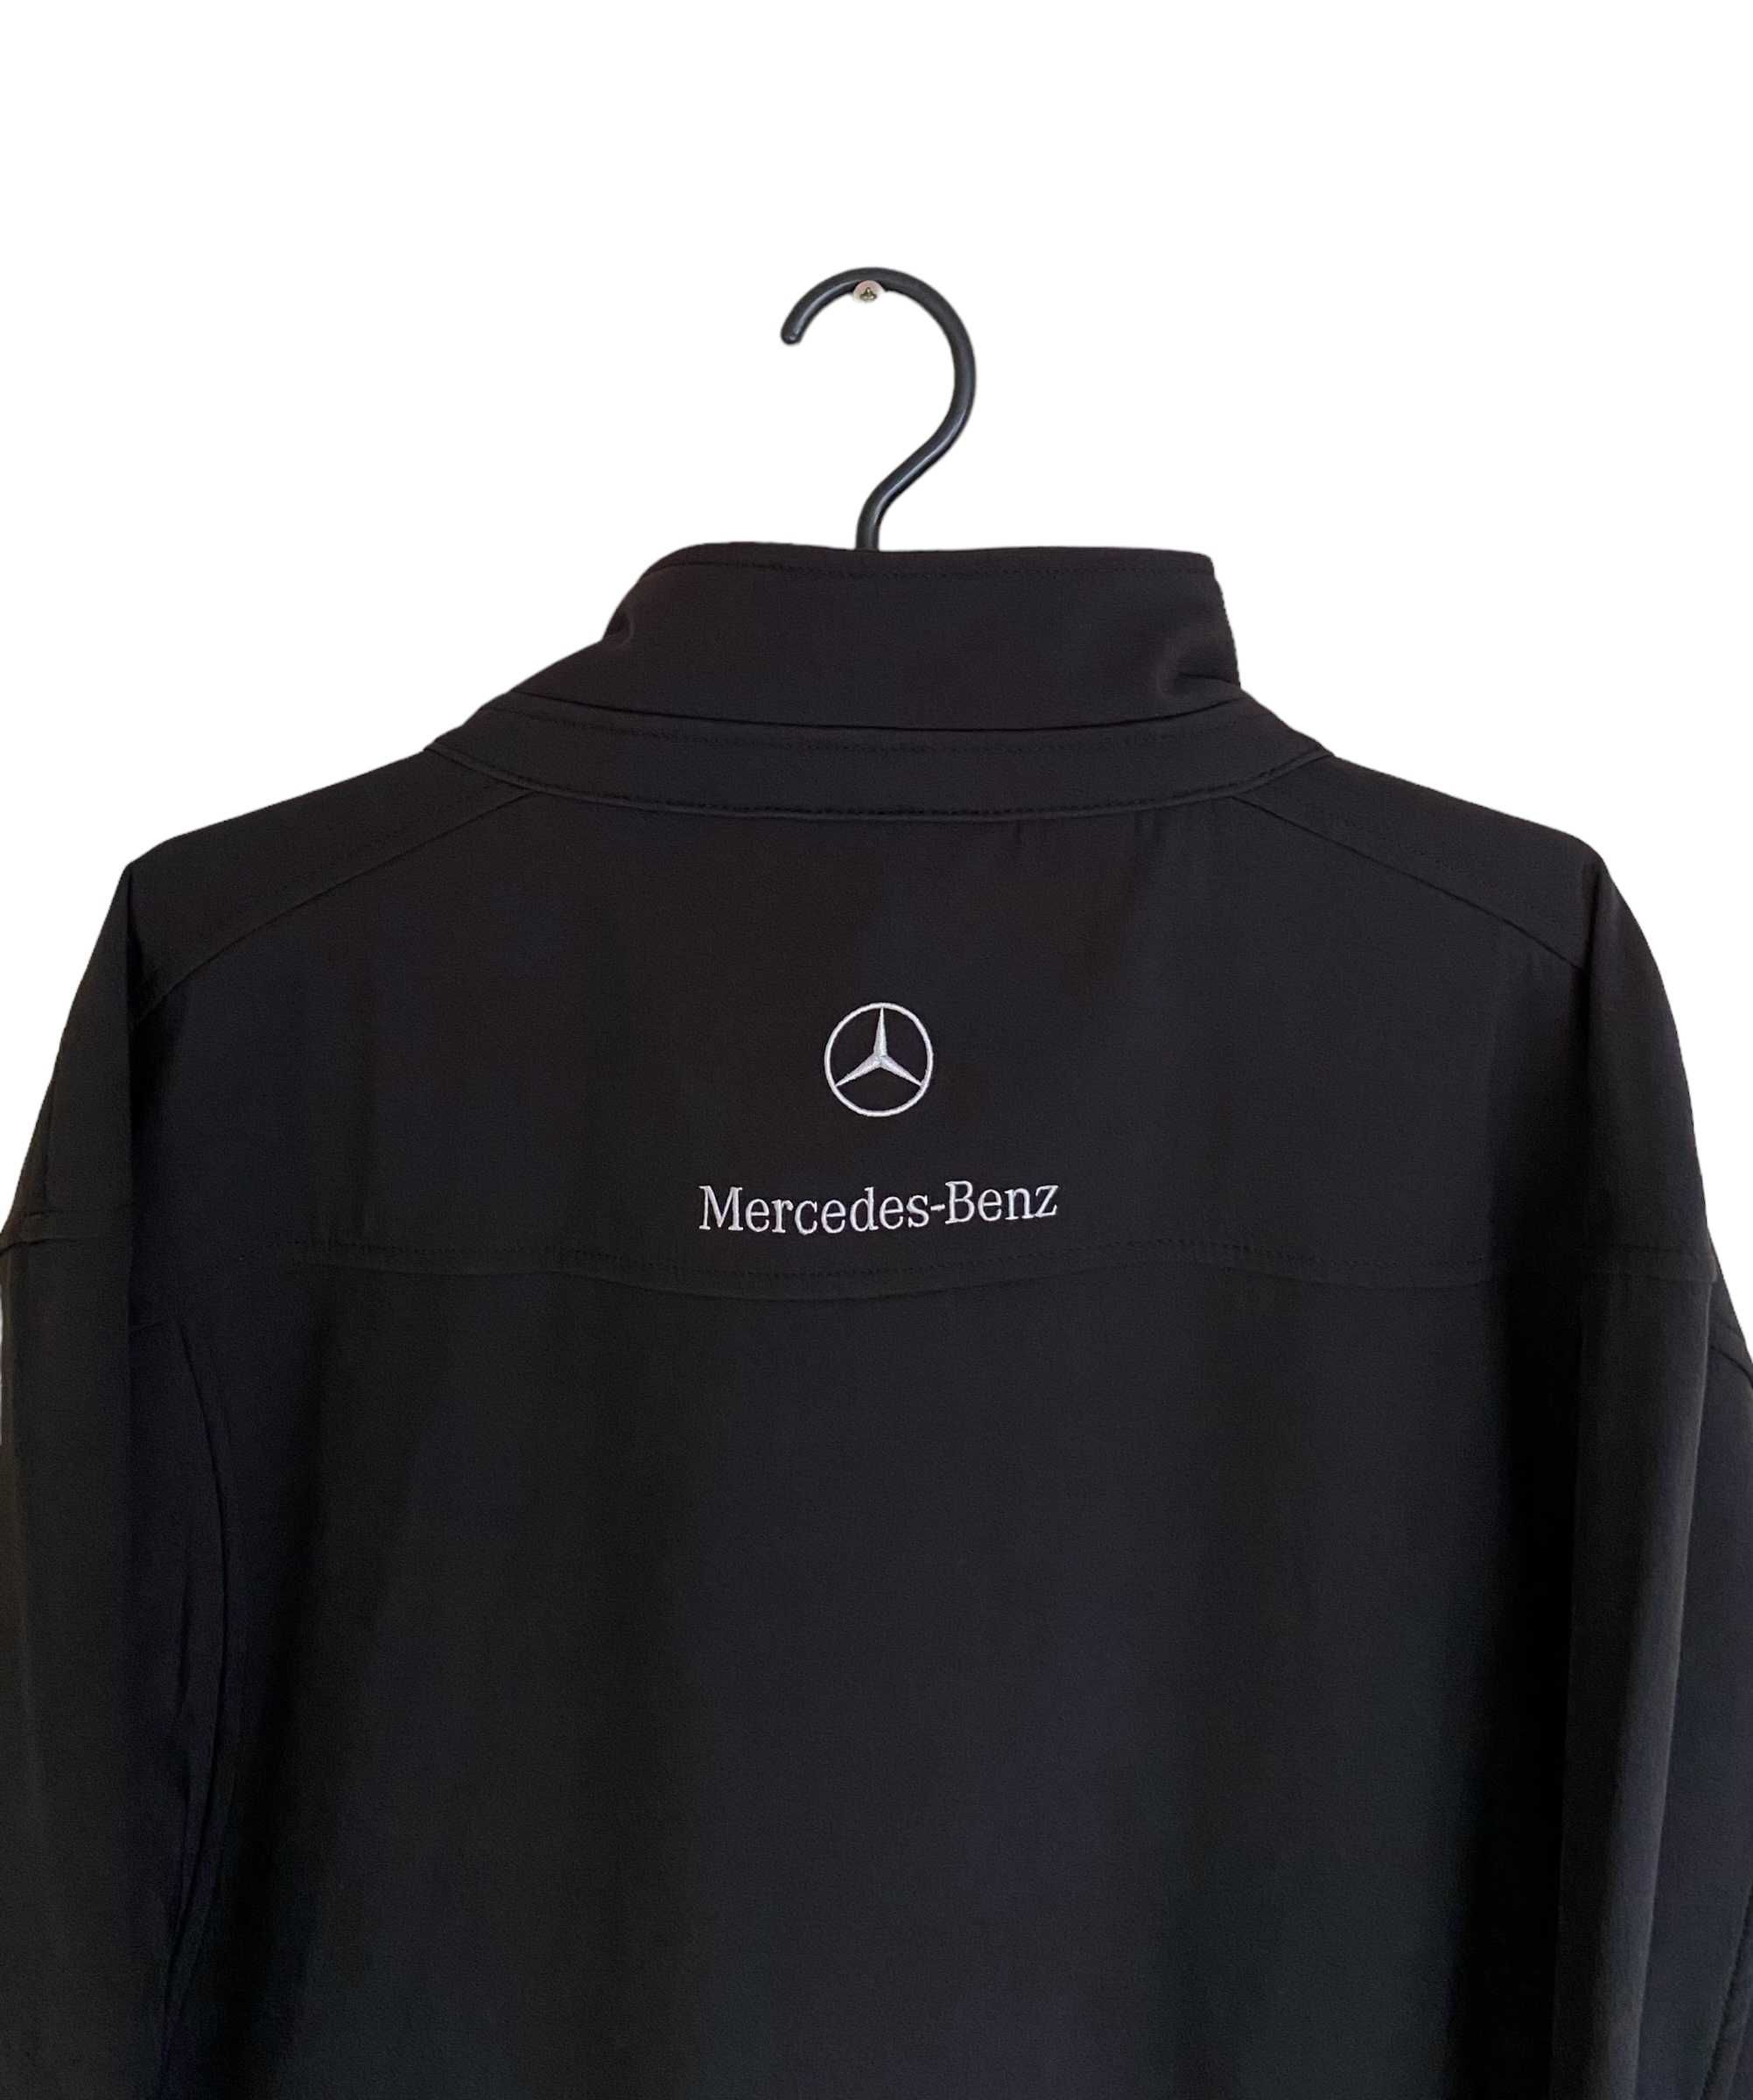 Mercedes Benz Actros softshell, rozmiar 2XL, stan bardzo dobry